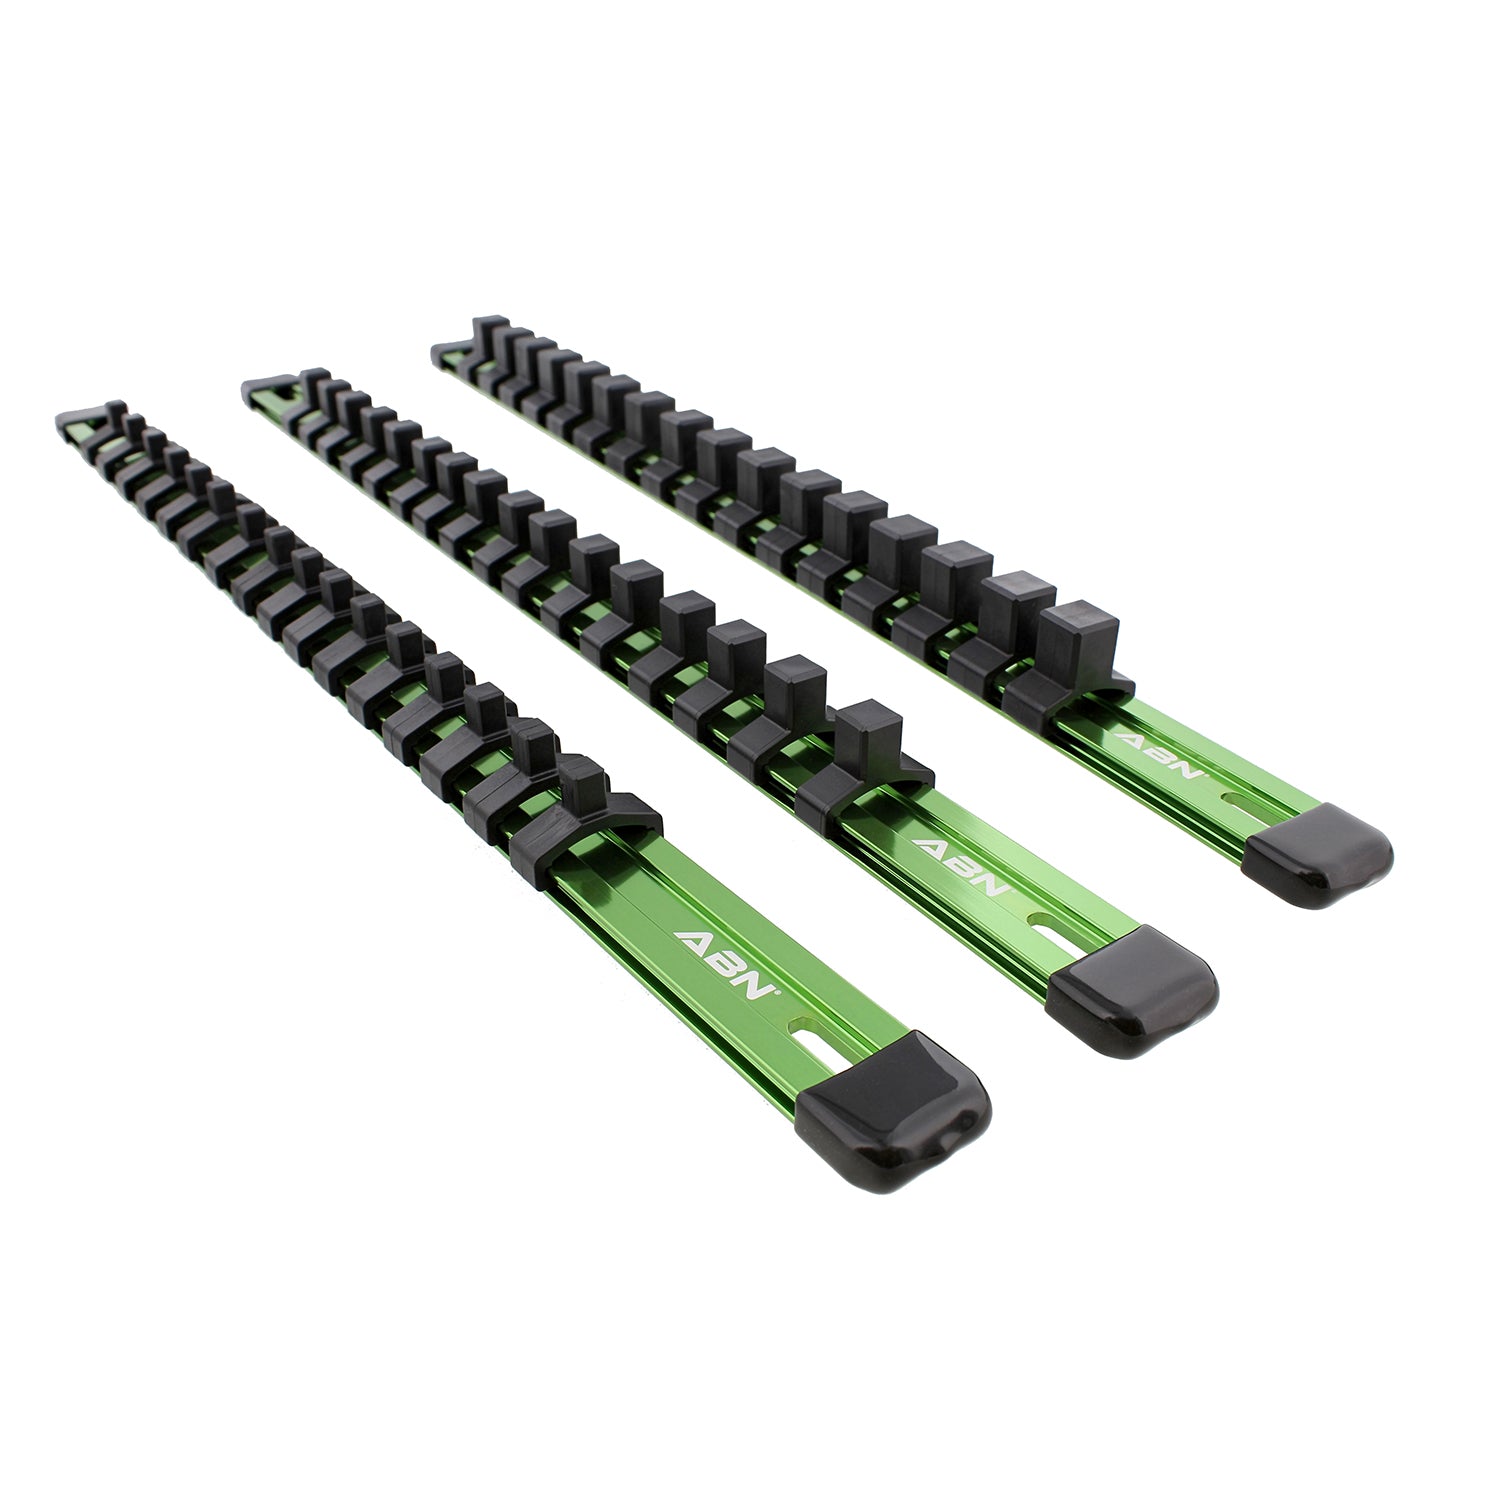 Green Aluminum Socket Organizer Holder Rails and Clips 1/4” 3/8” 1/2"